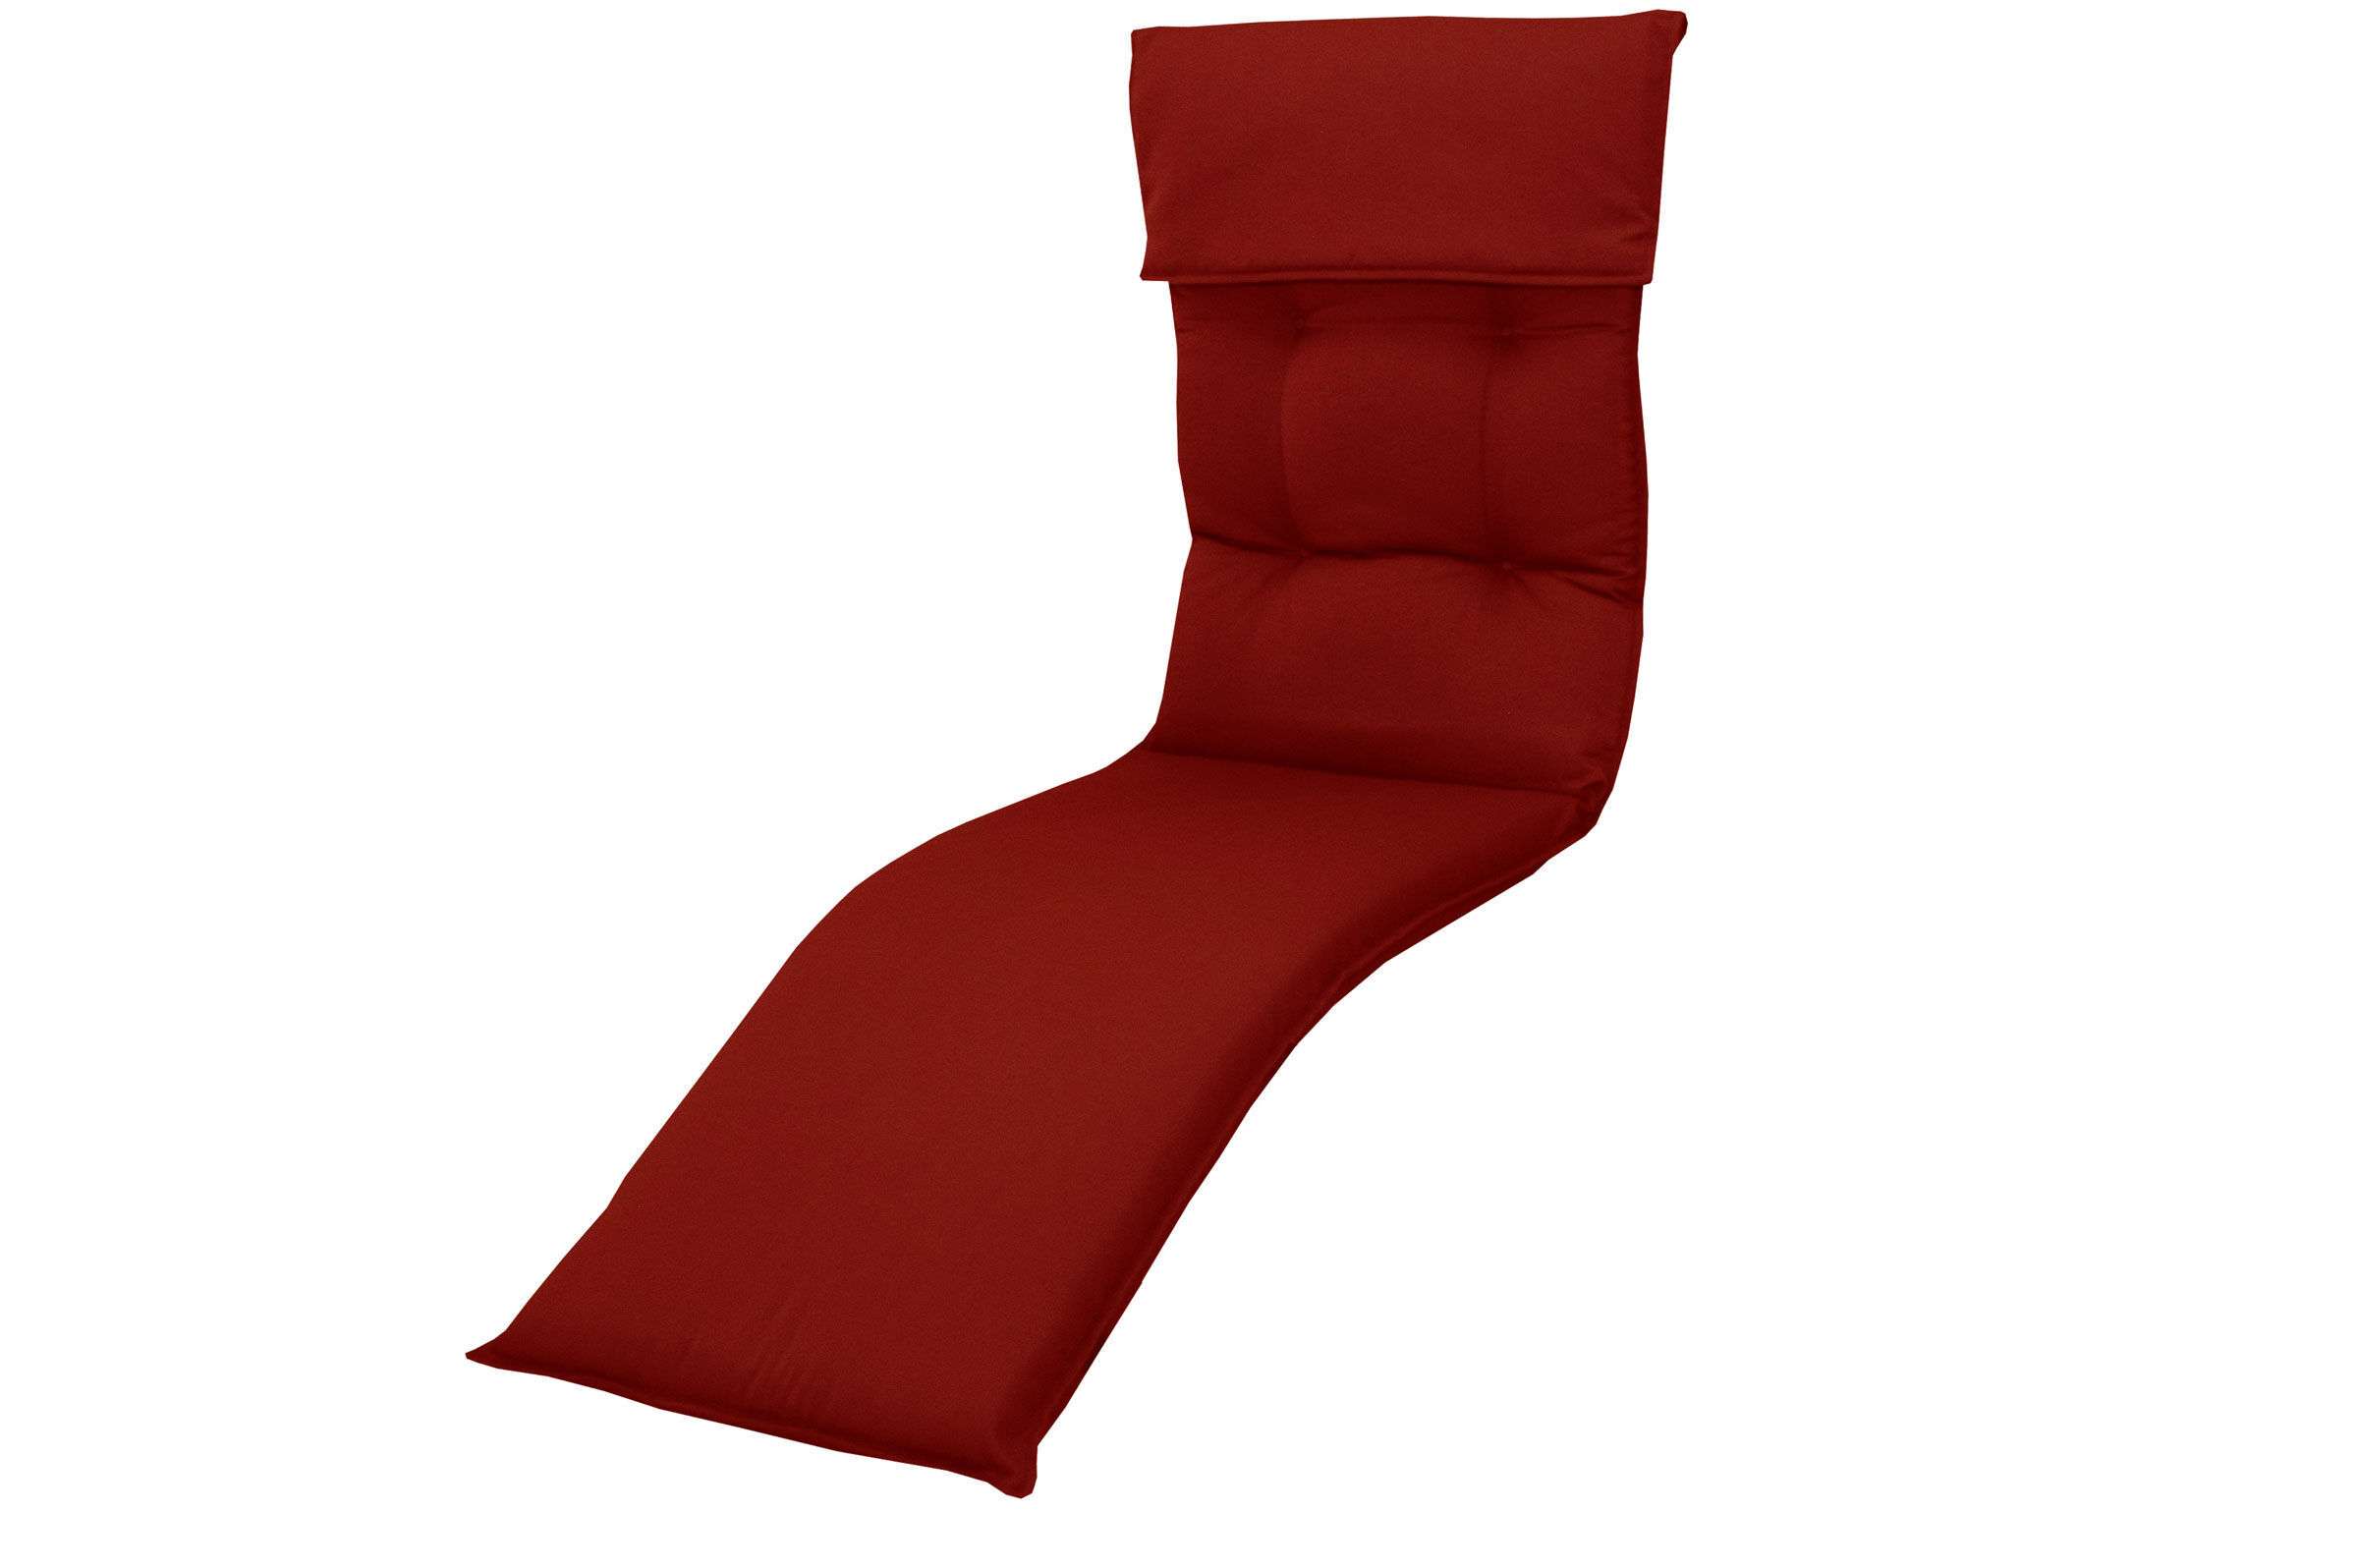 DOPPLER Relax Style Relaxsesselauflage, bordeaux, Dralon, 175 x 45,5 x 7 cm, inklusive Befestigungsbänder